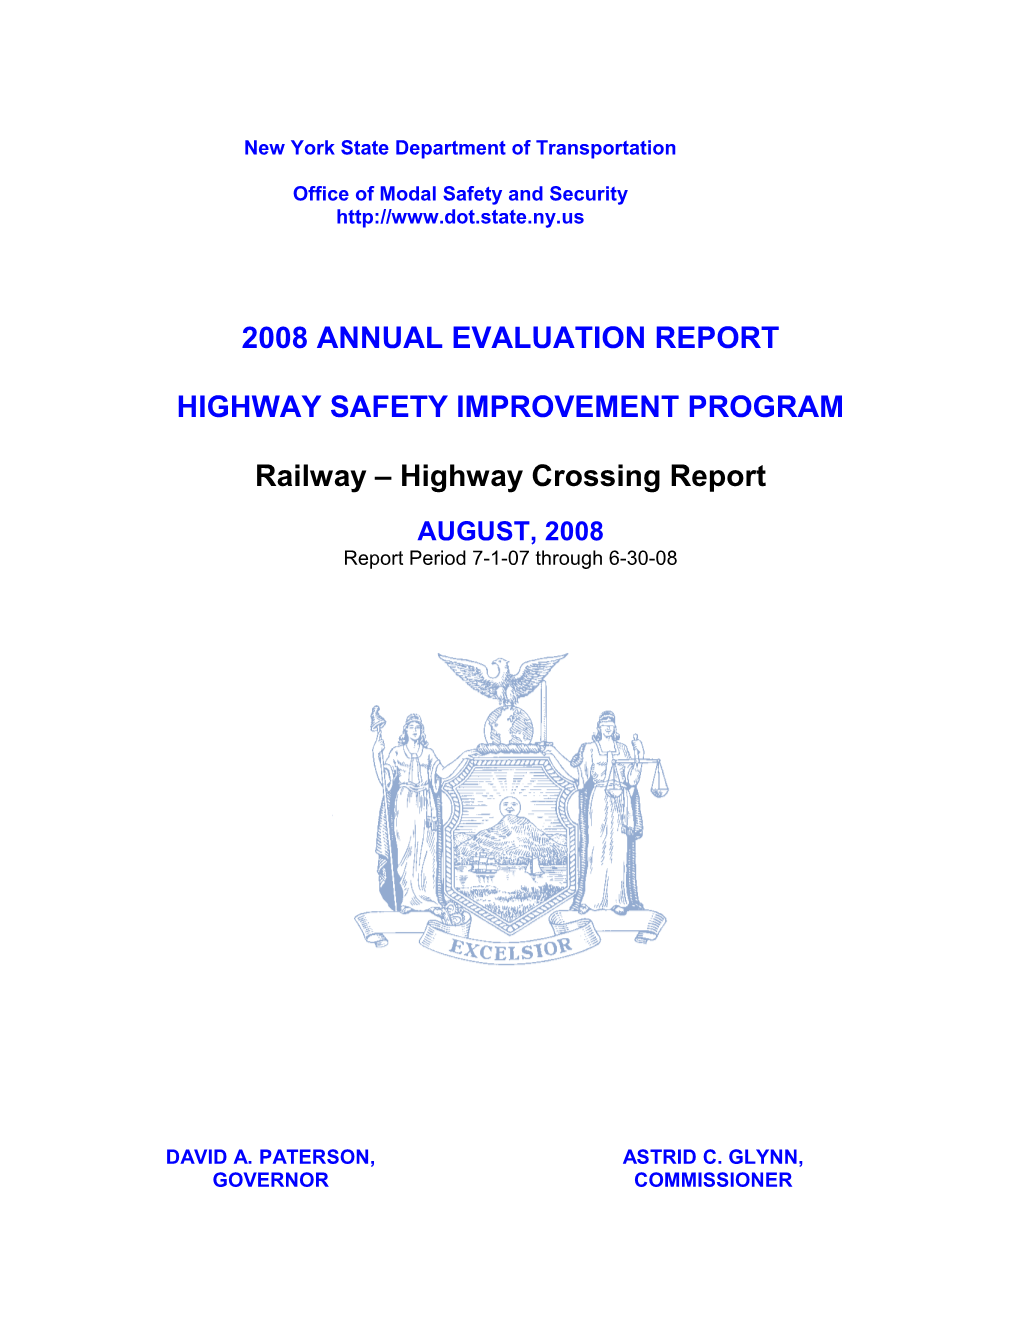 New York State Highway-Rail Grade Crossing Program